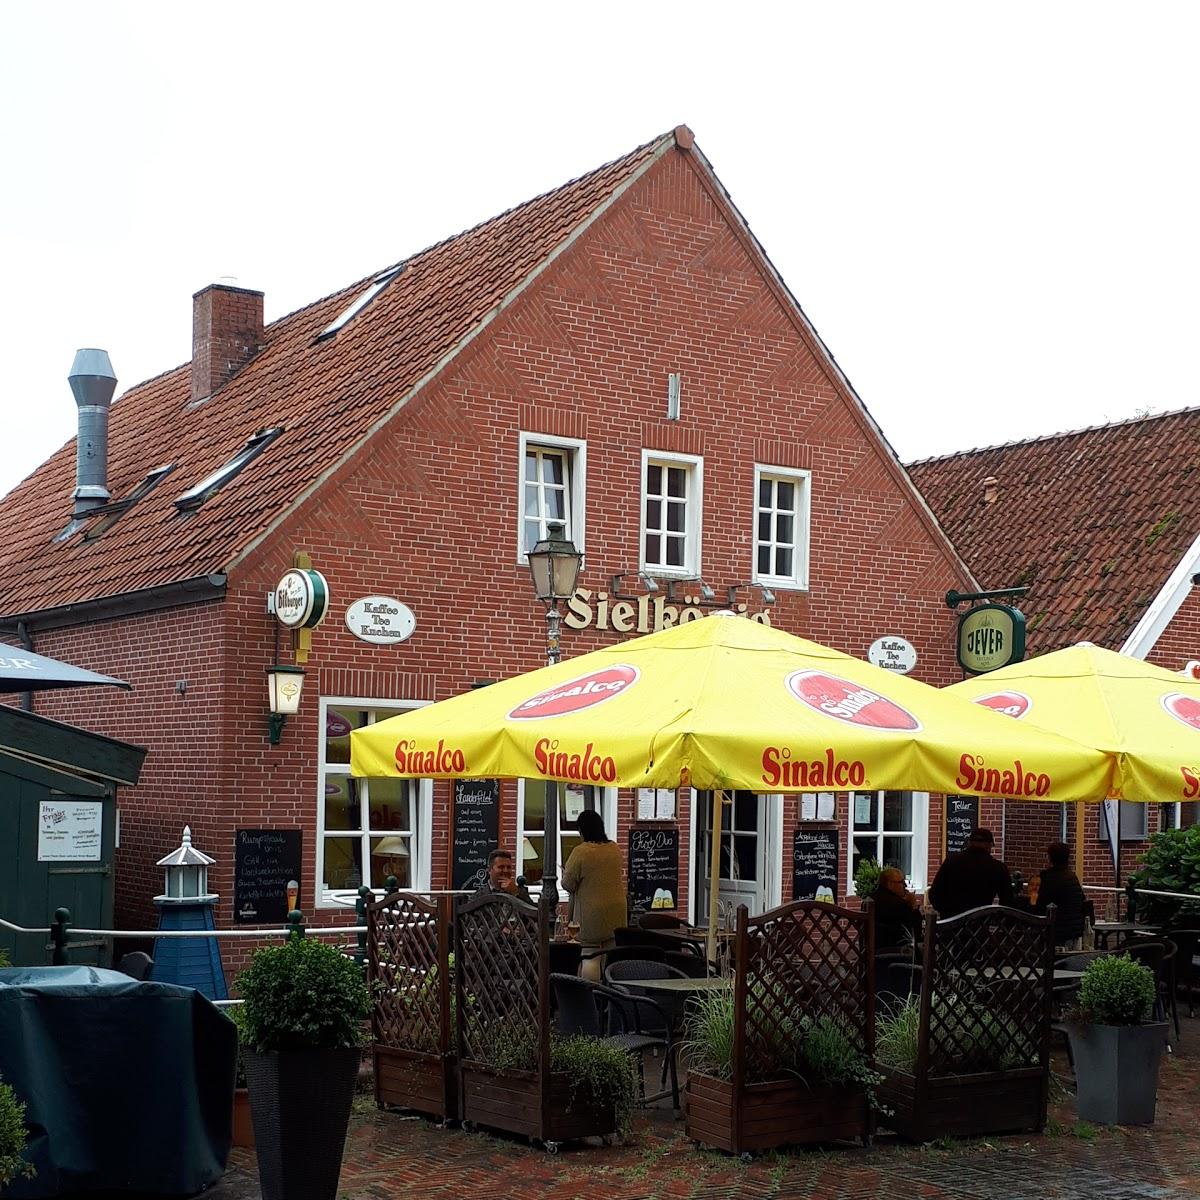 Restaurant "Sielkönig" in Krummhörn